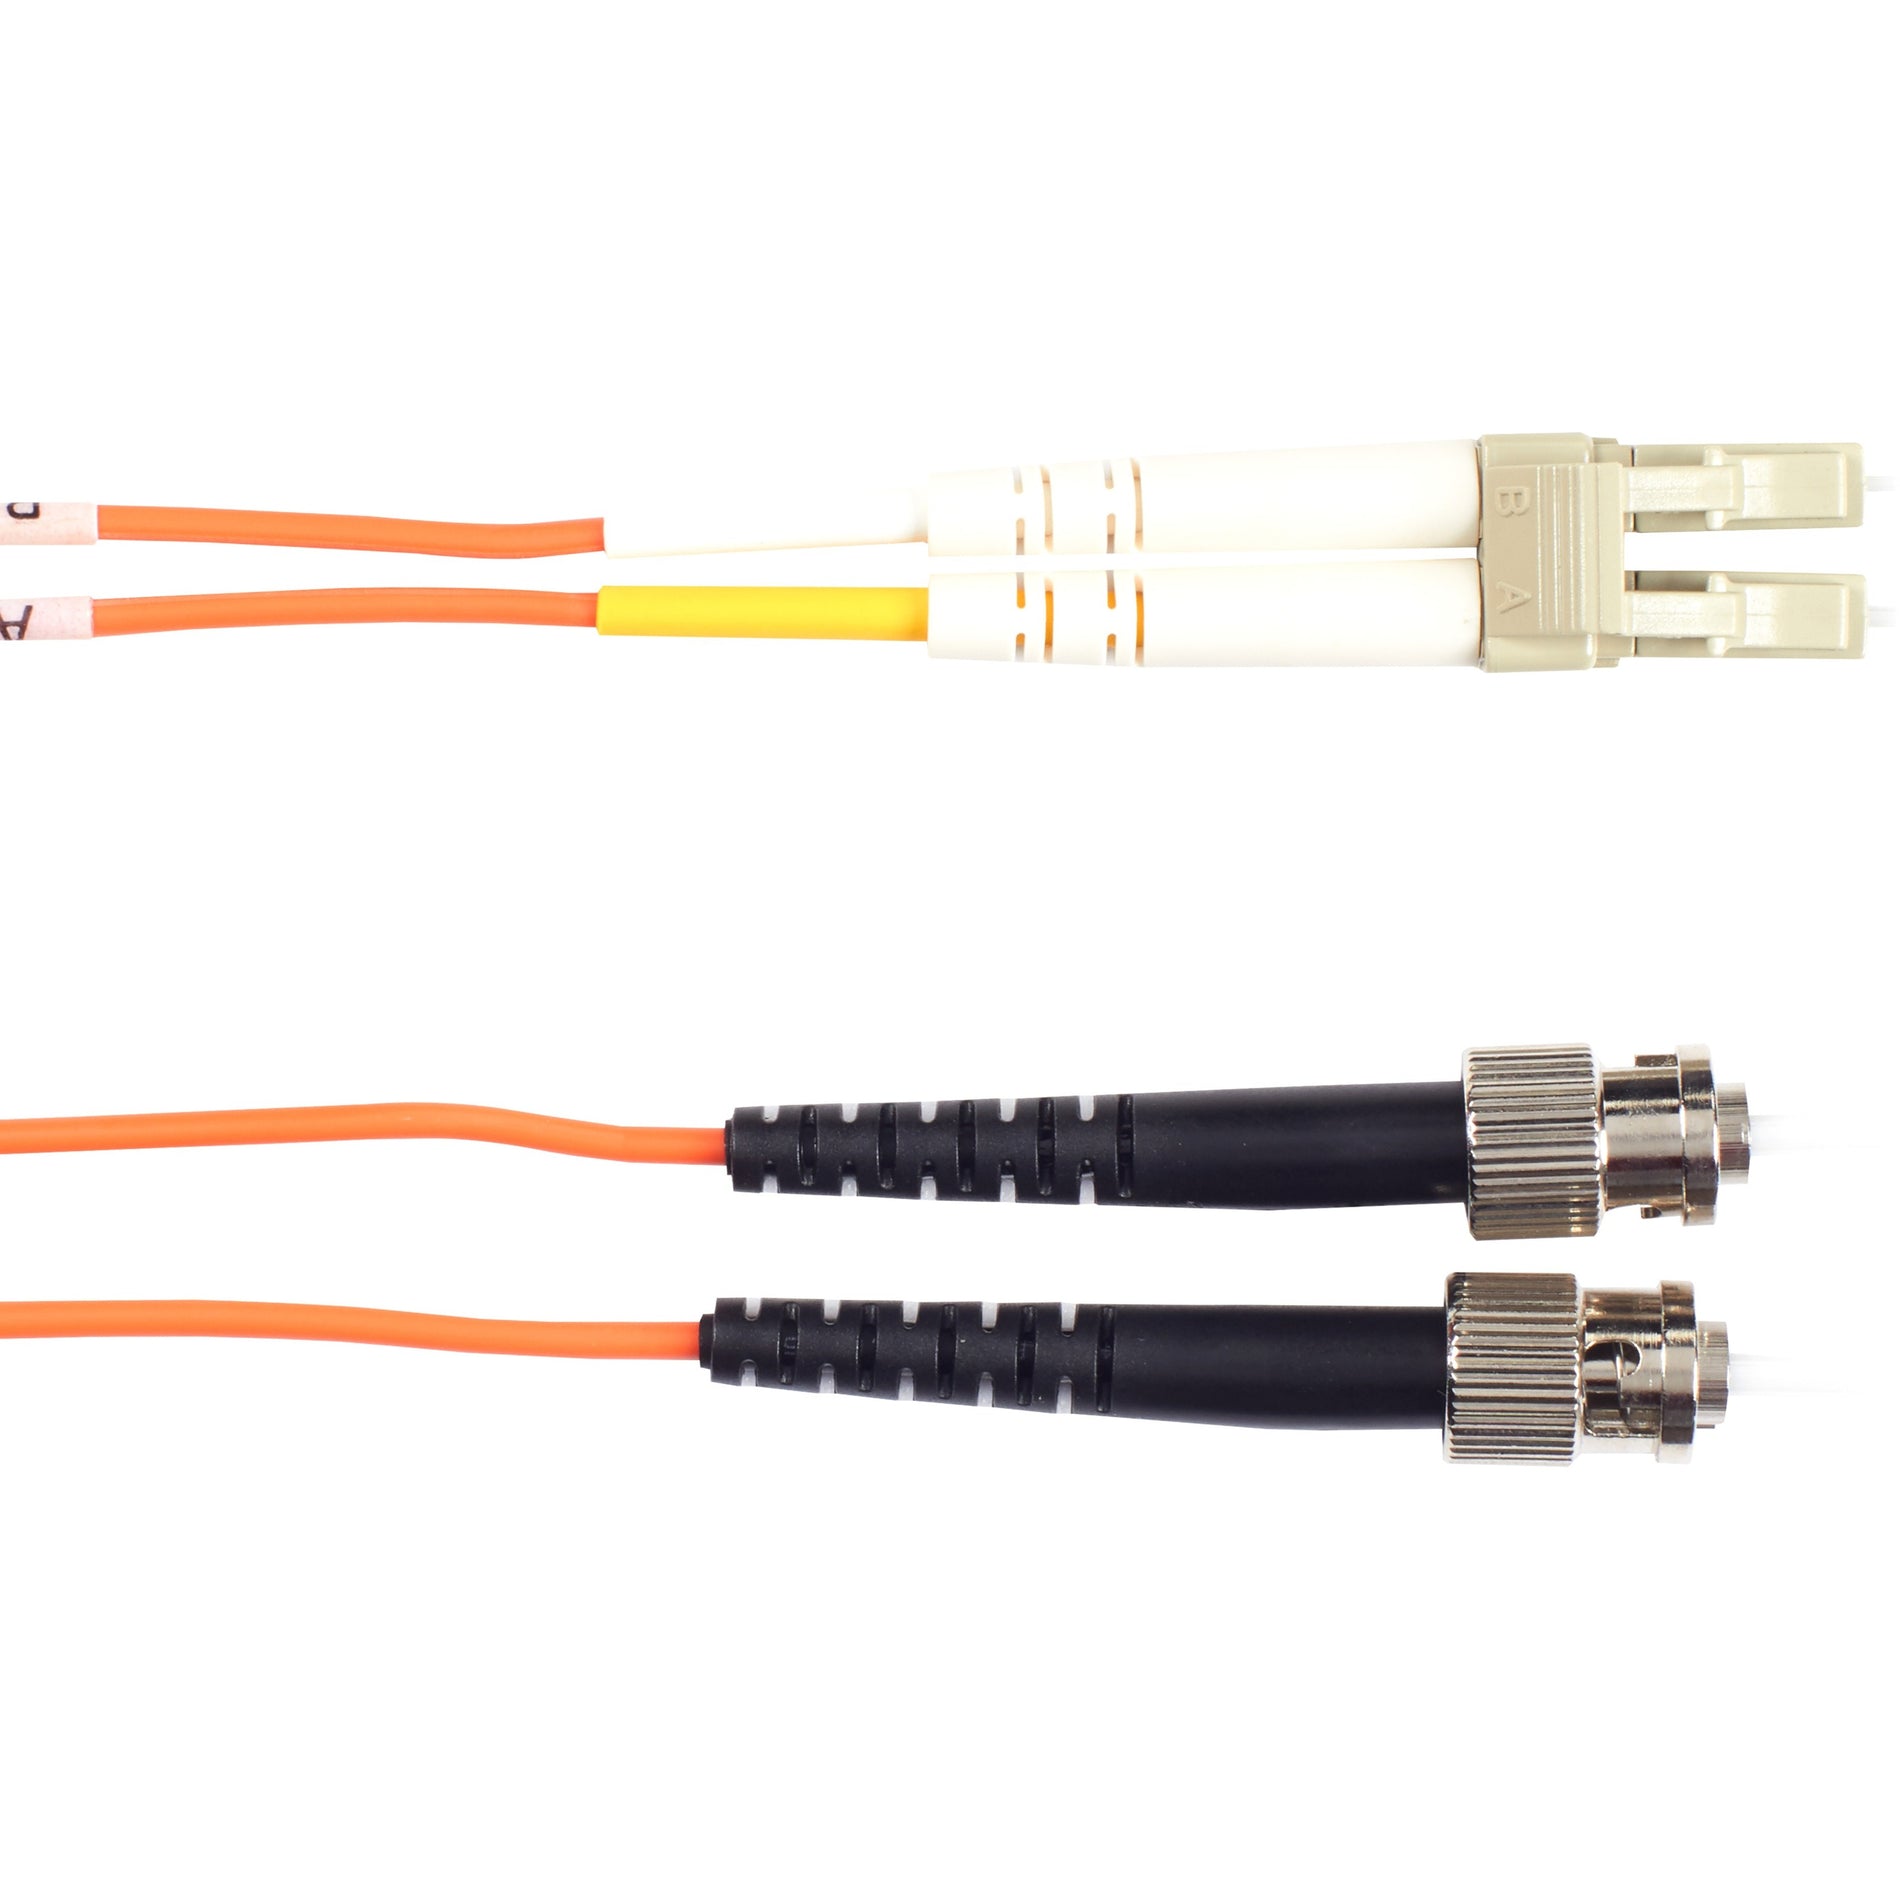 Black Box EFN110-005M-STLC Fiber Optic Duplex Patch Network Cable, 16.40 ft, Multi-mode, Orange